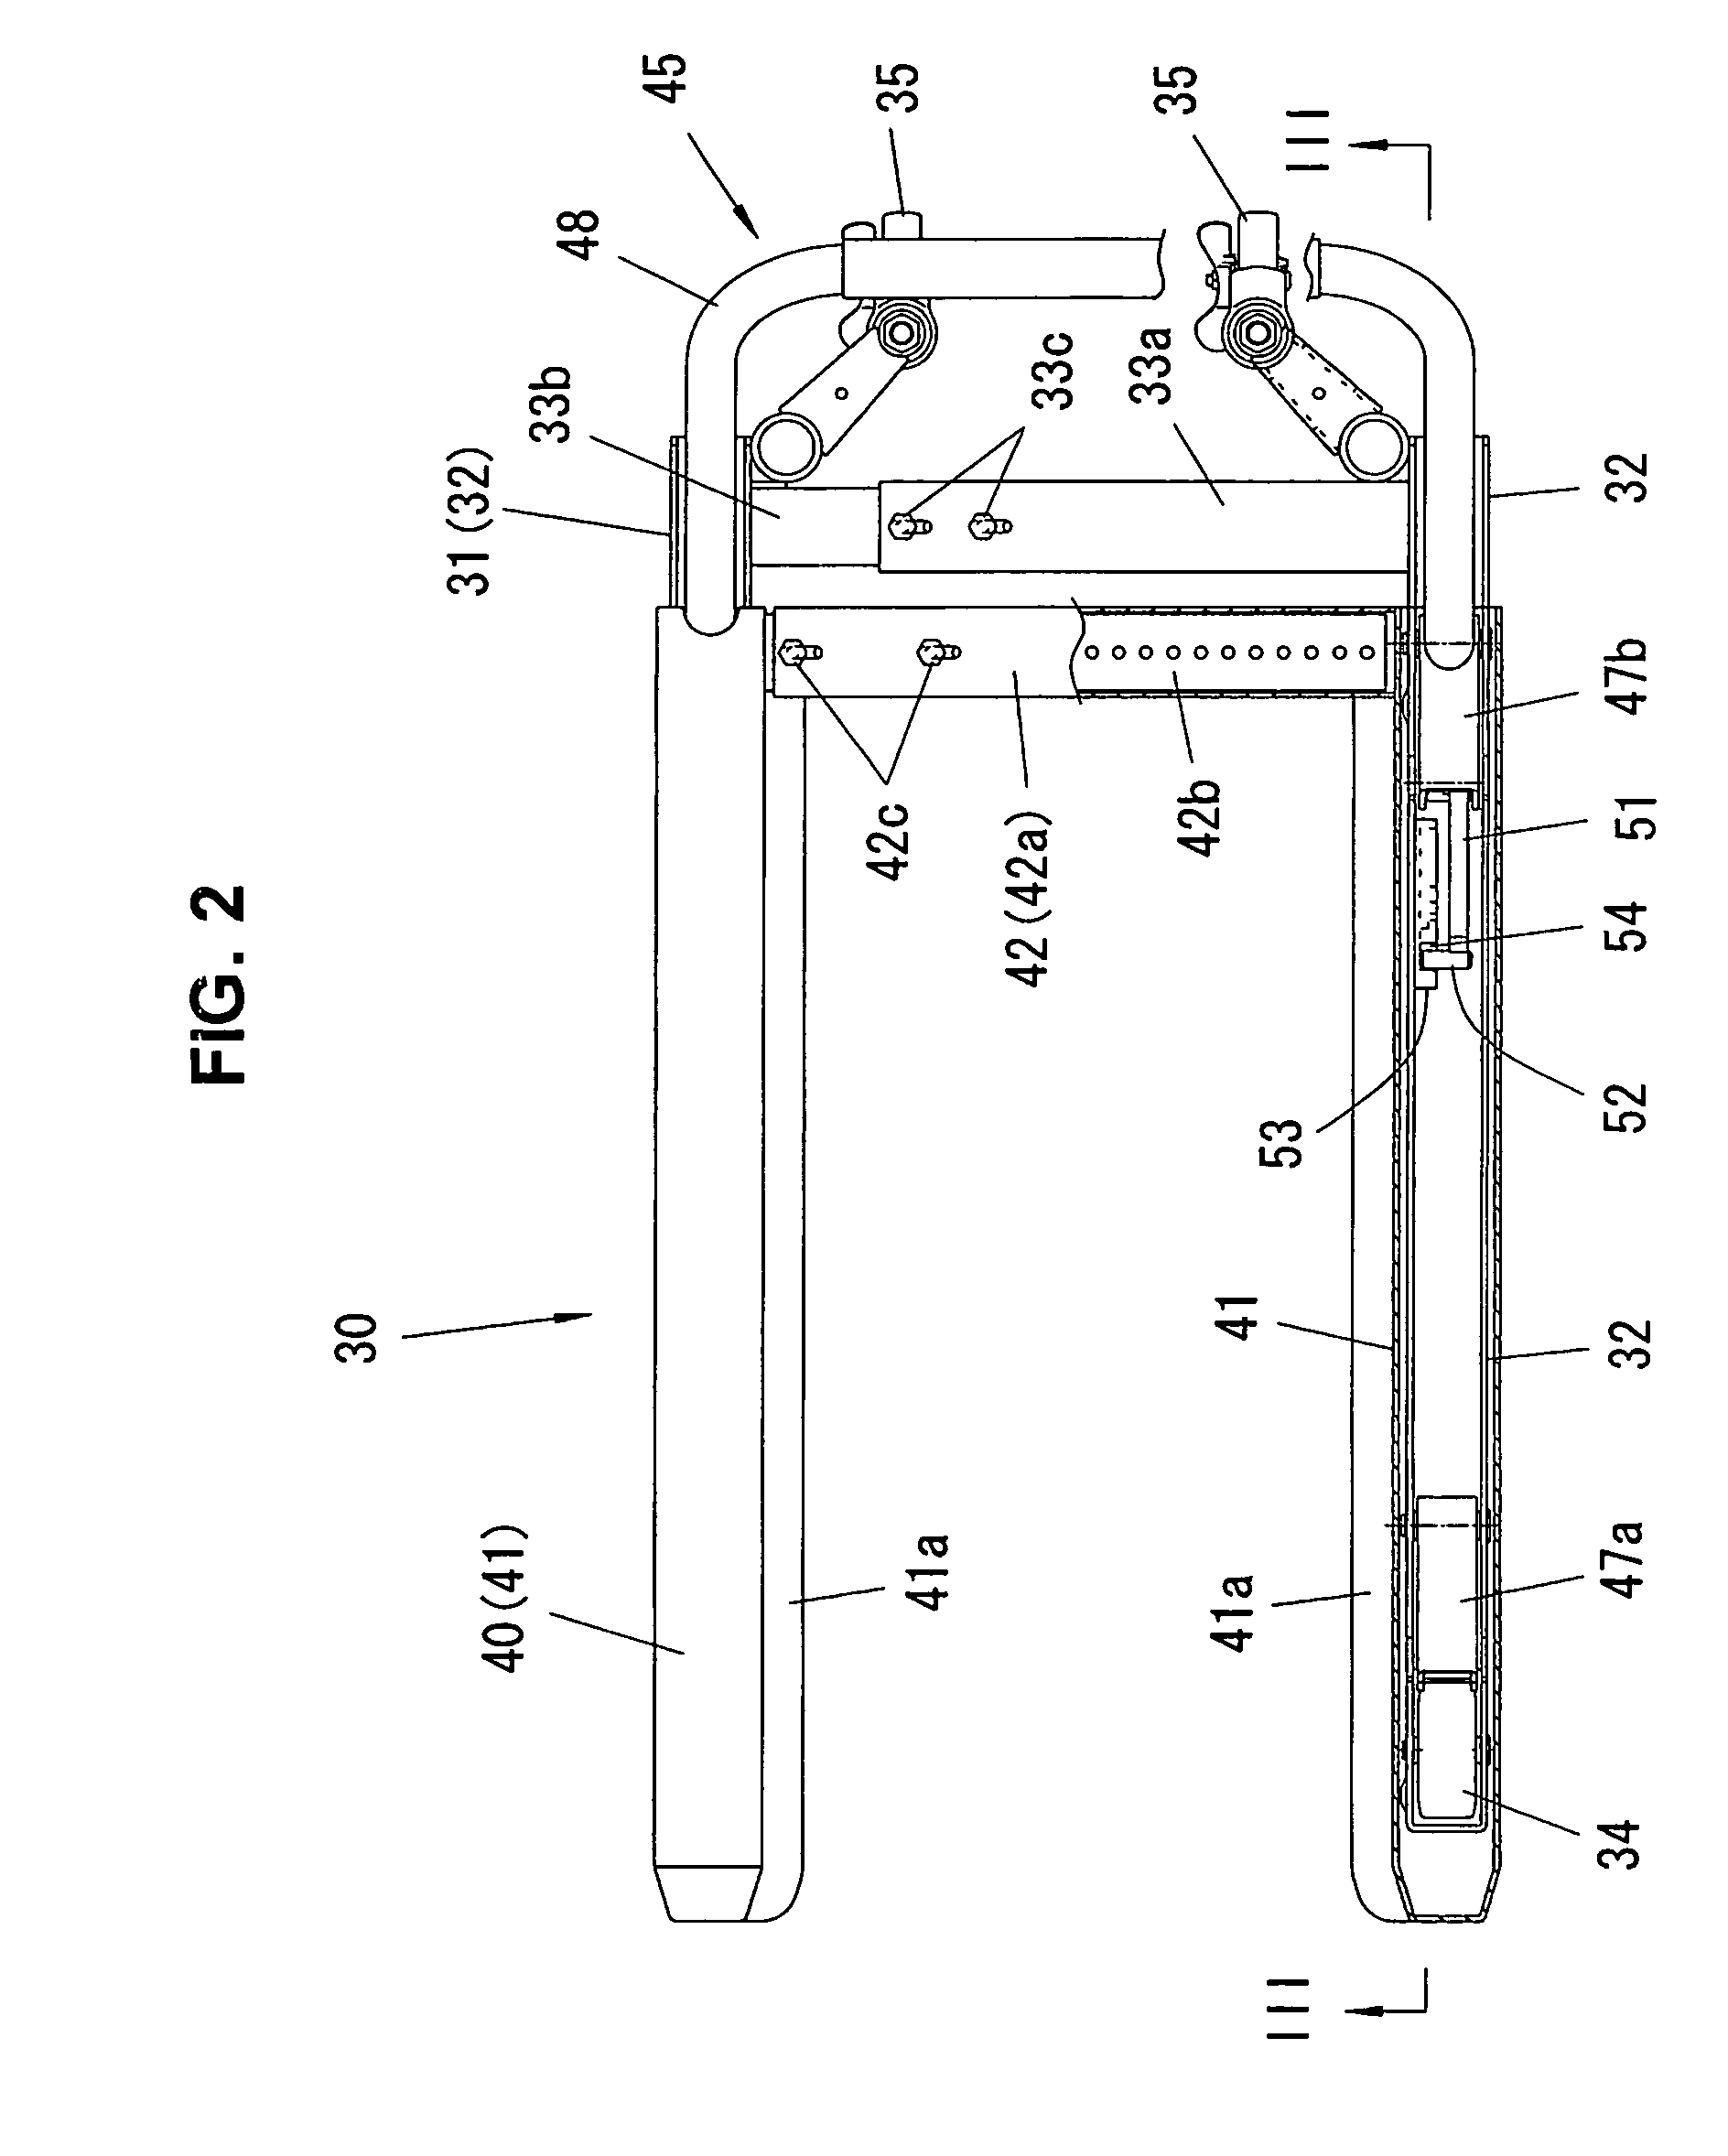 Locking apparatus of truck with hoist